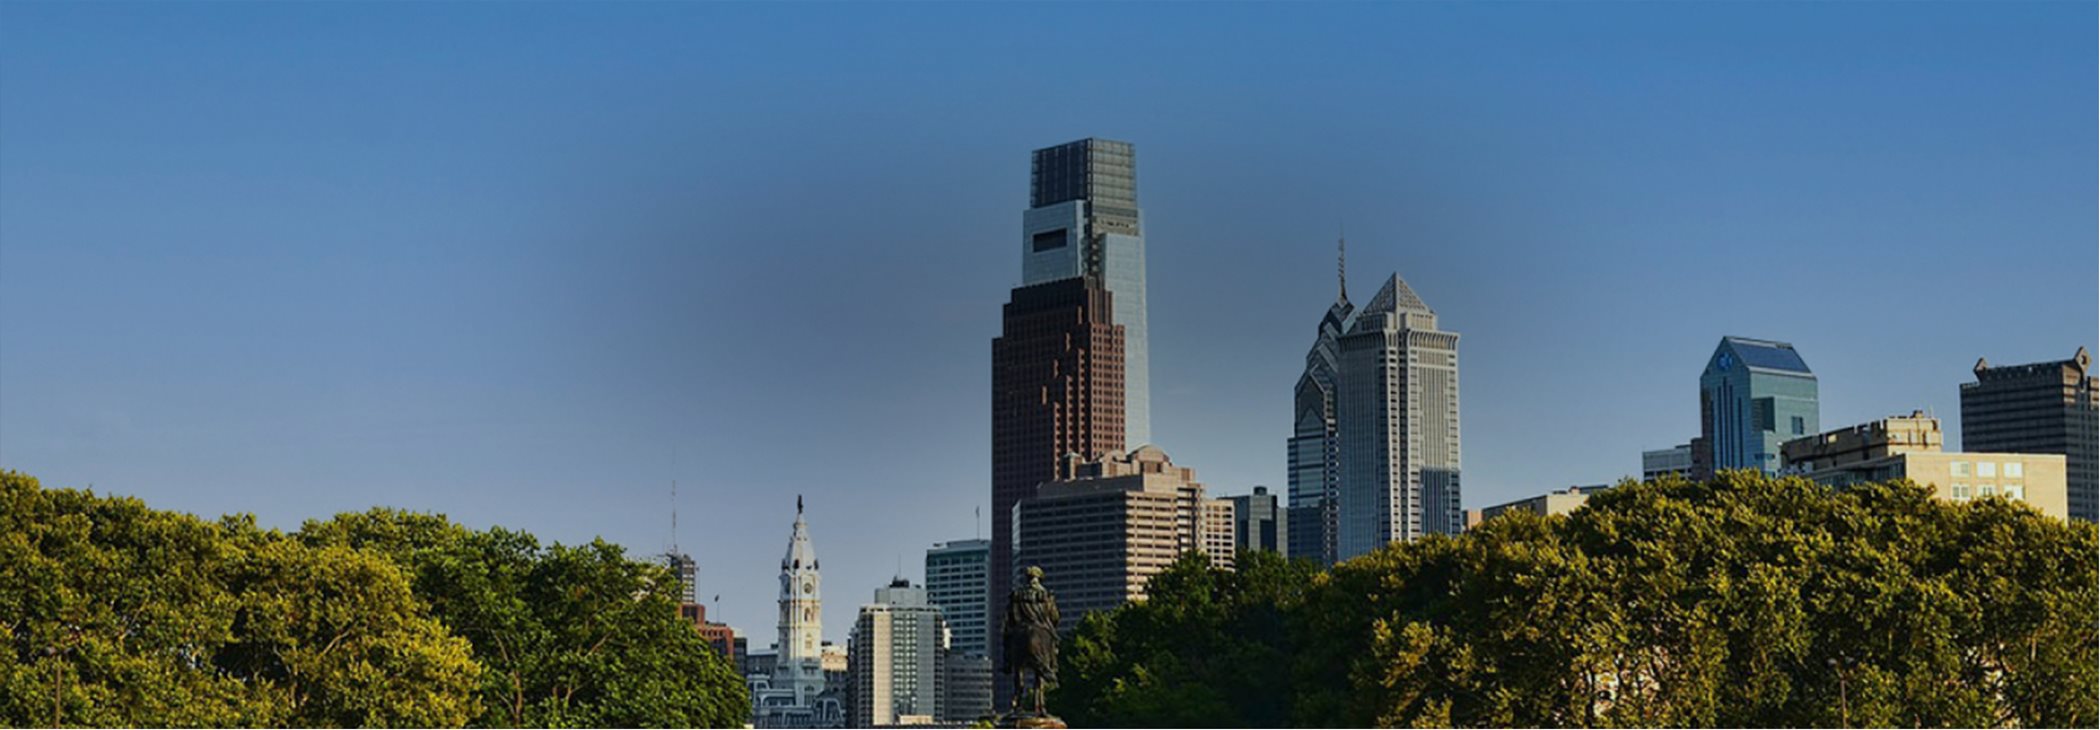 Philly skyline image